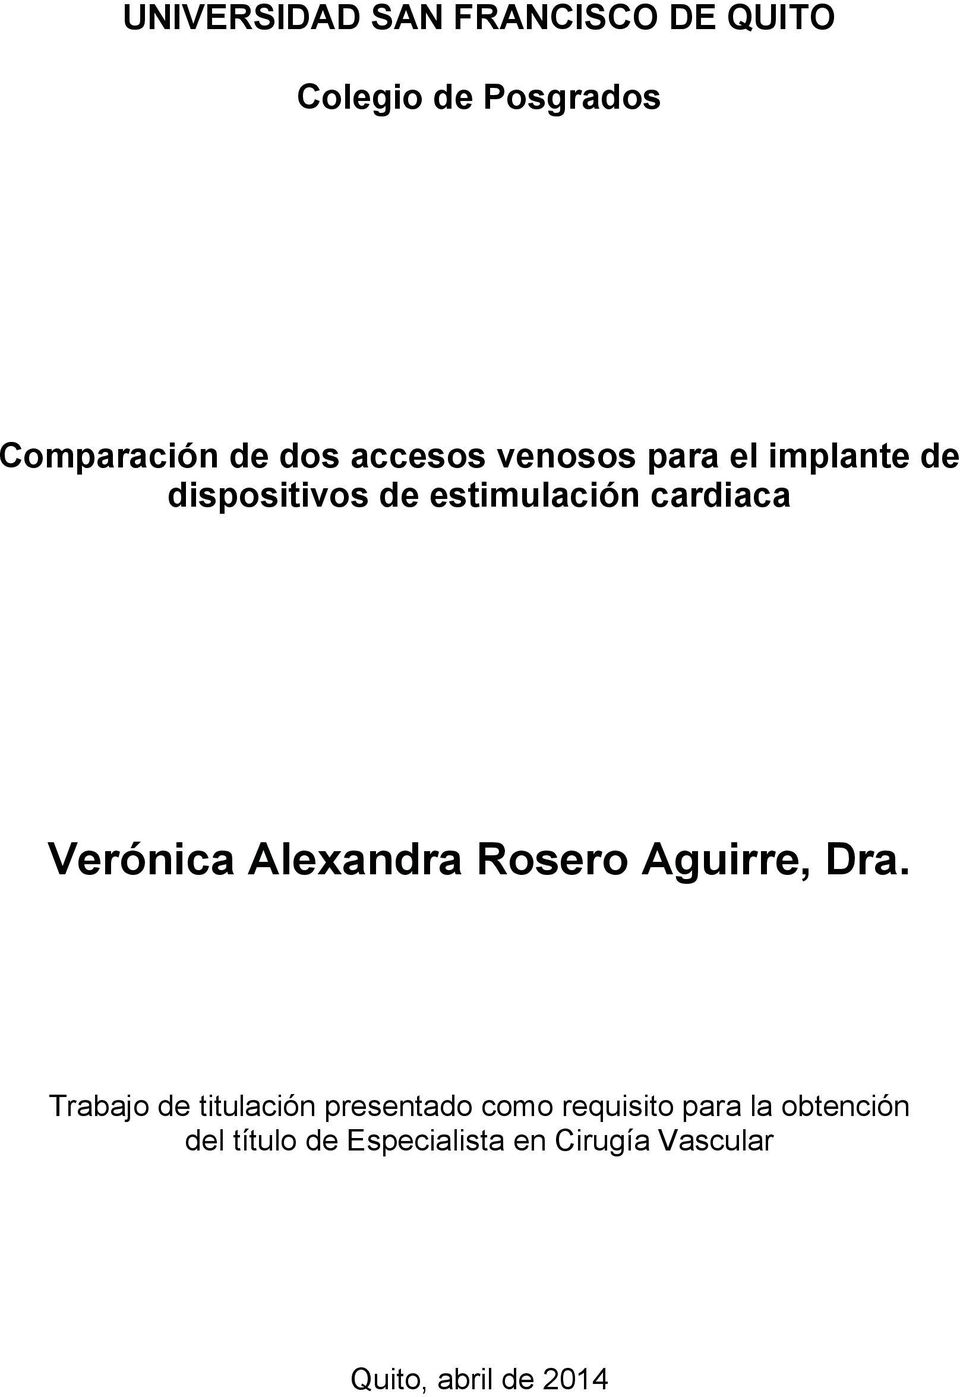 Verónica Alexandra Rosero Aguirre, Dra.